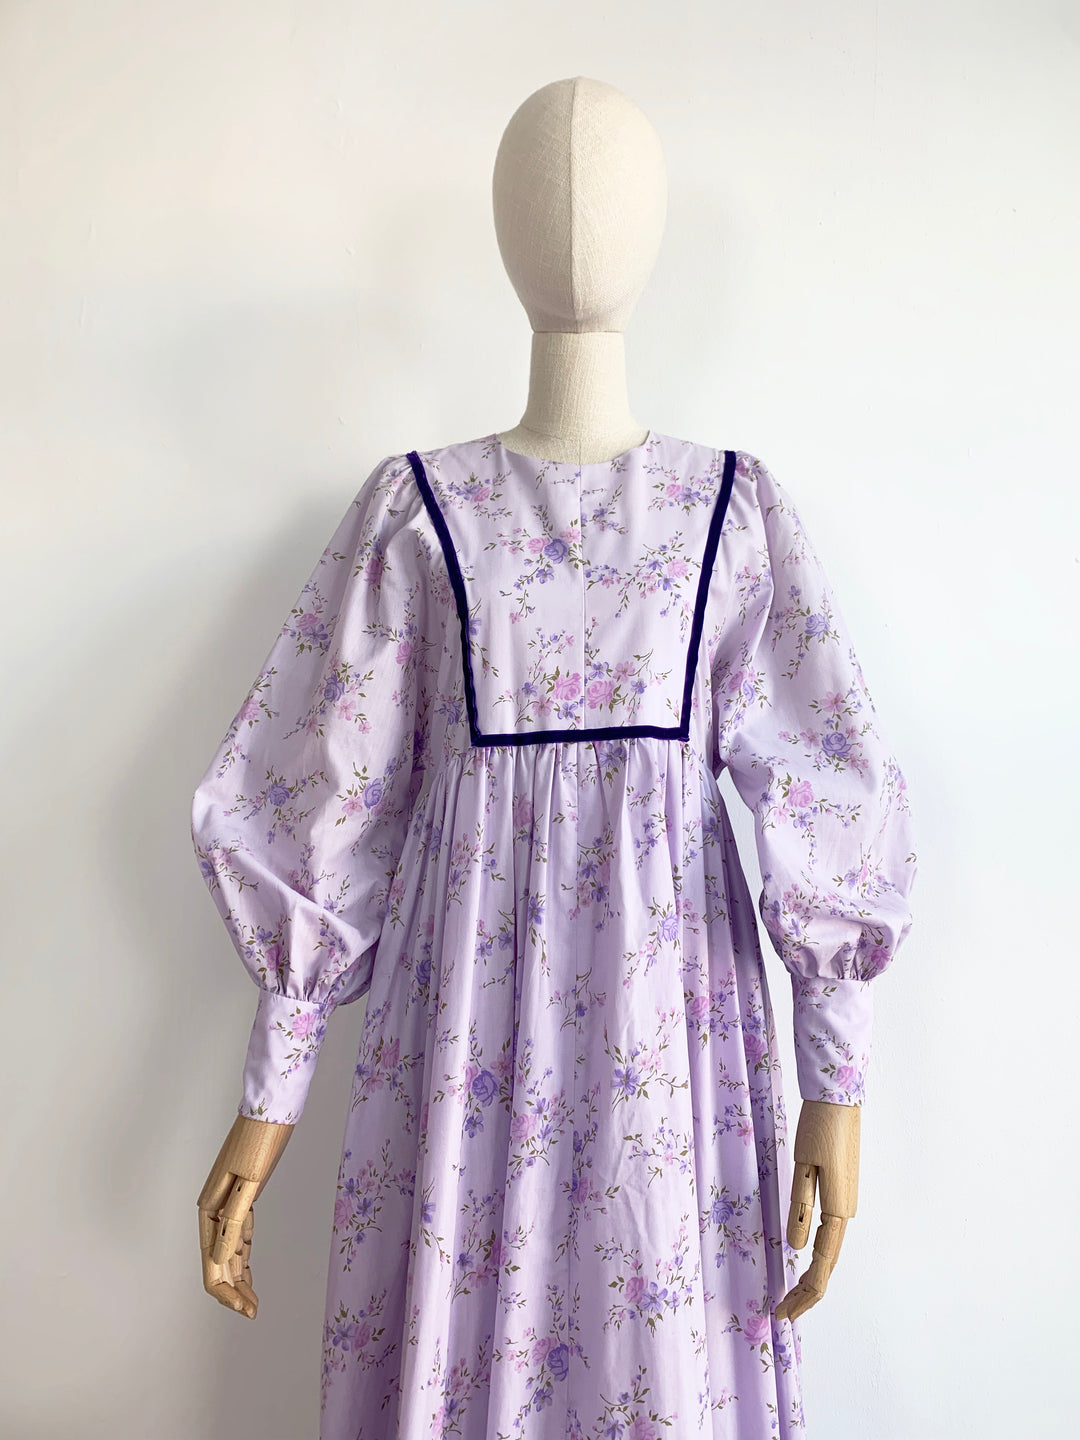 The Lavender Rose Dress